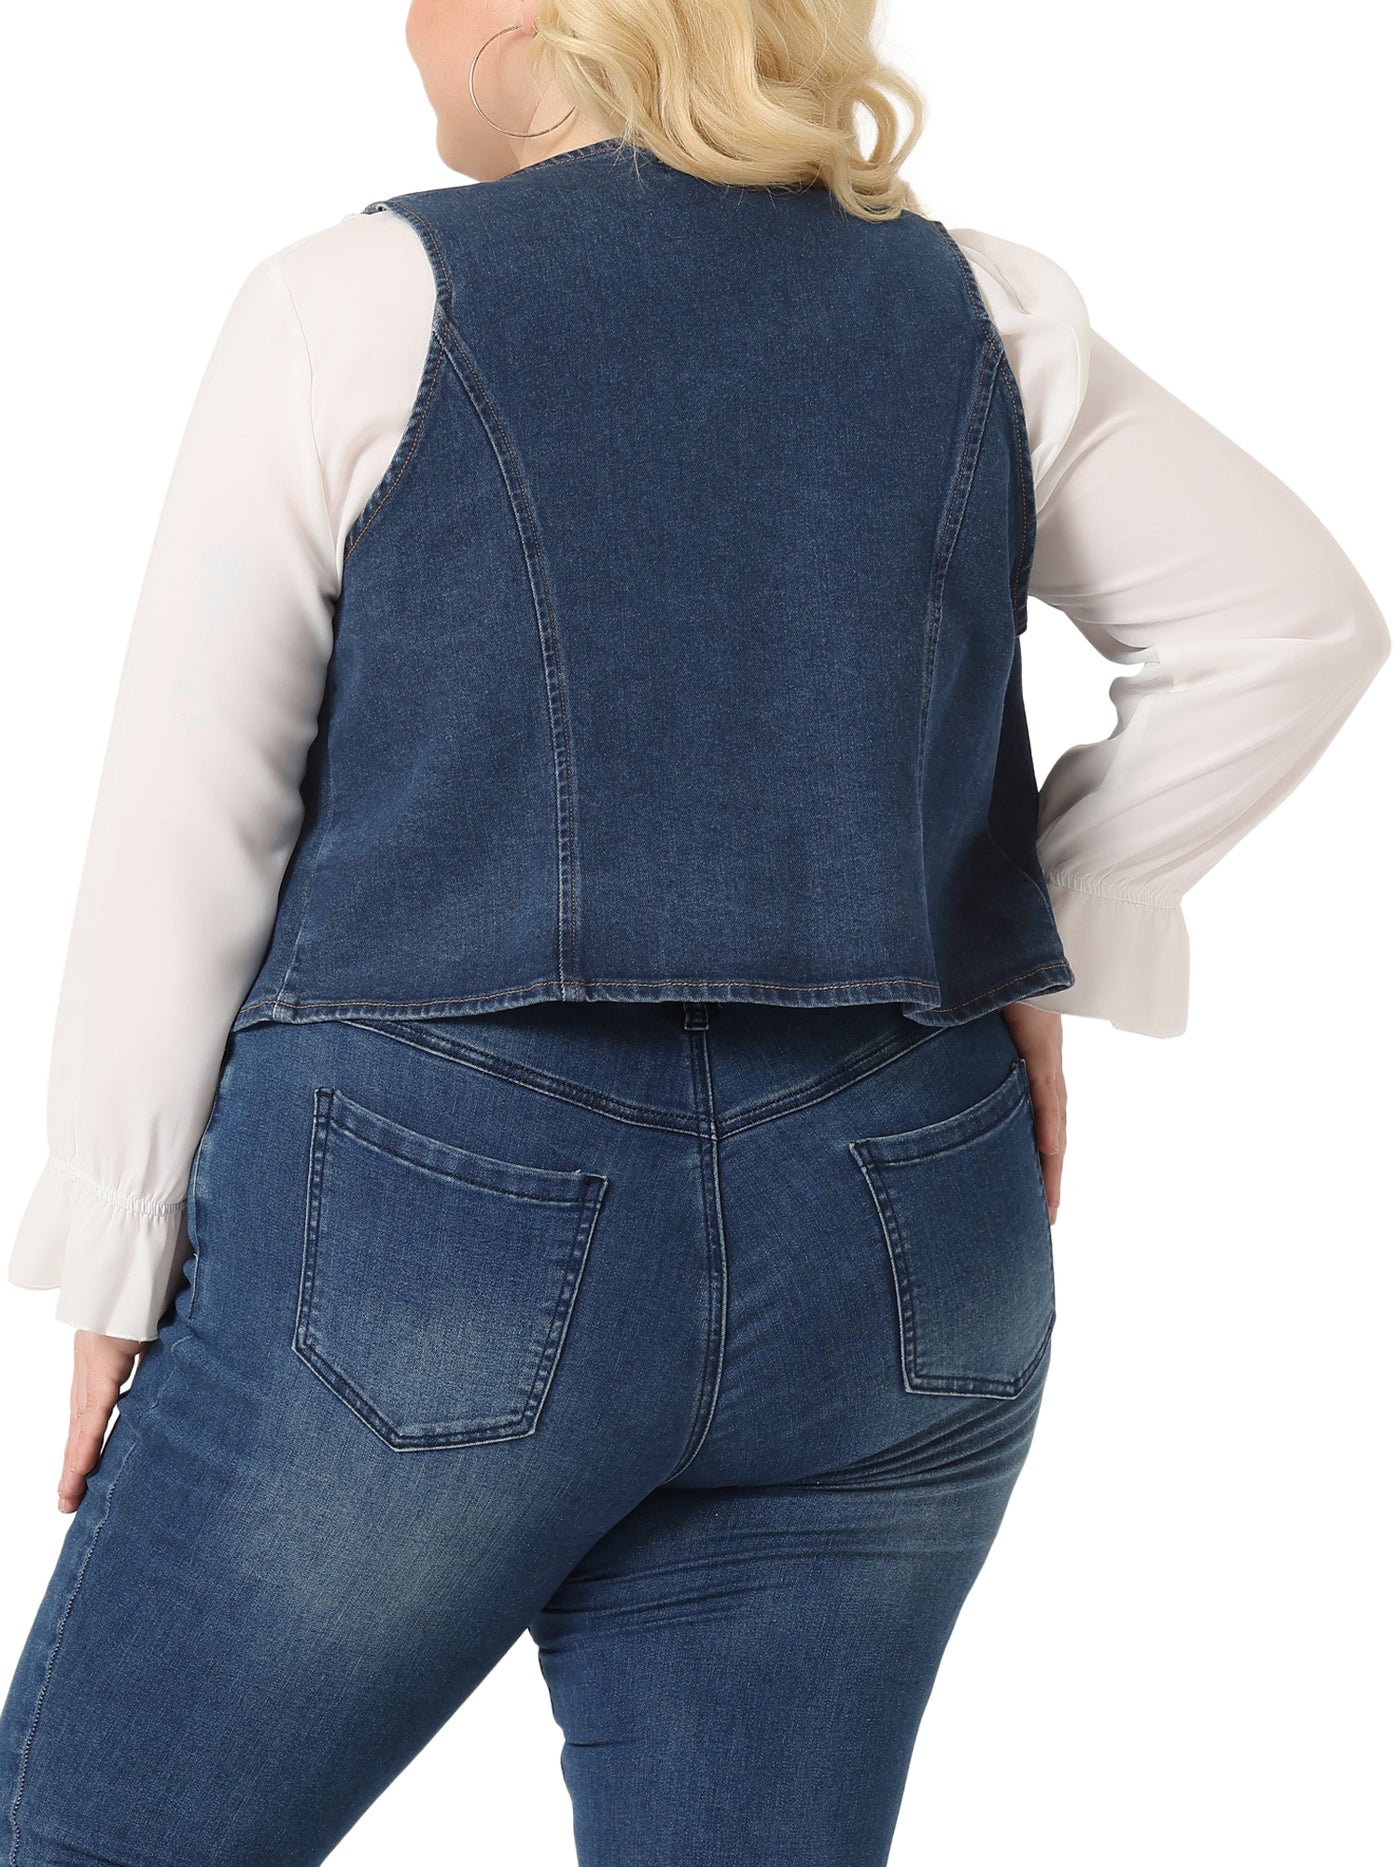 Bublédon Plus Size Denim Vest for Women Sleeveless V Neck Button Down Jean Waistcoat Jacket